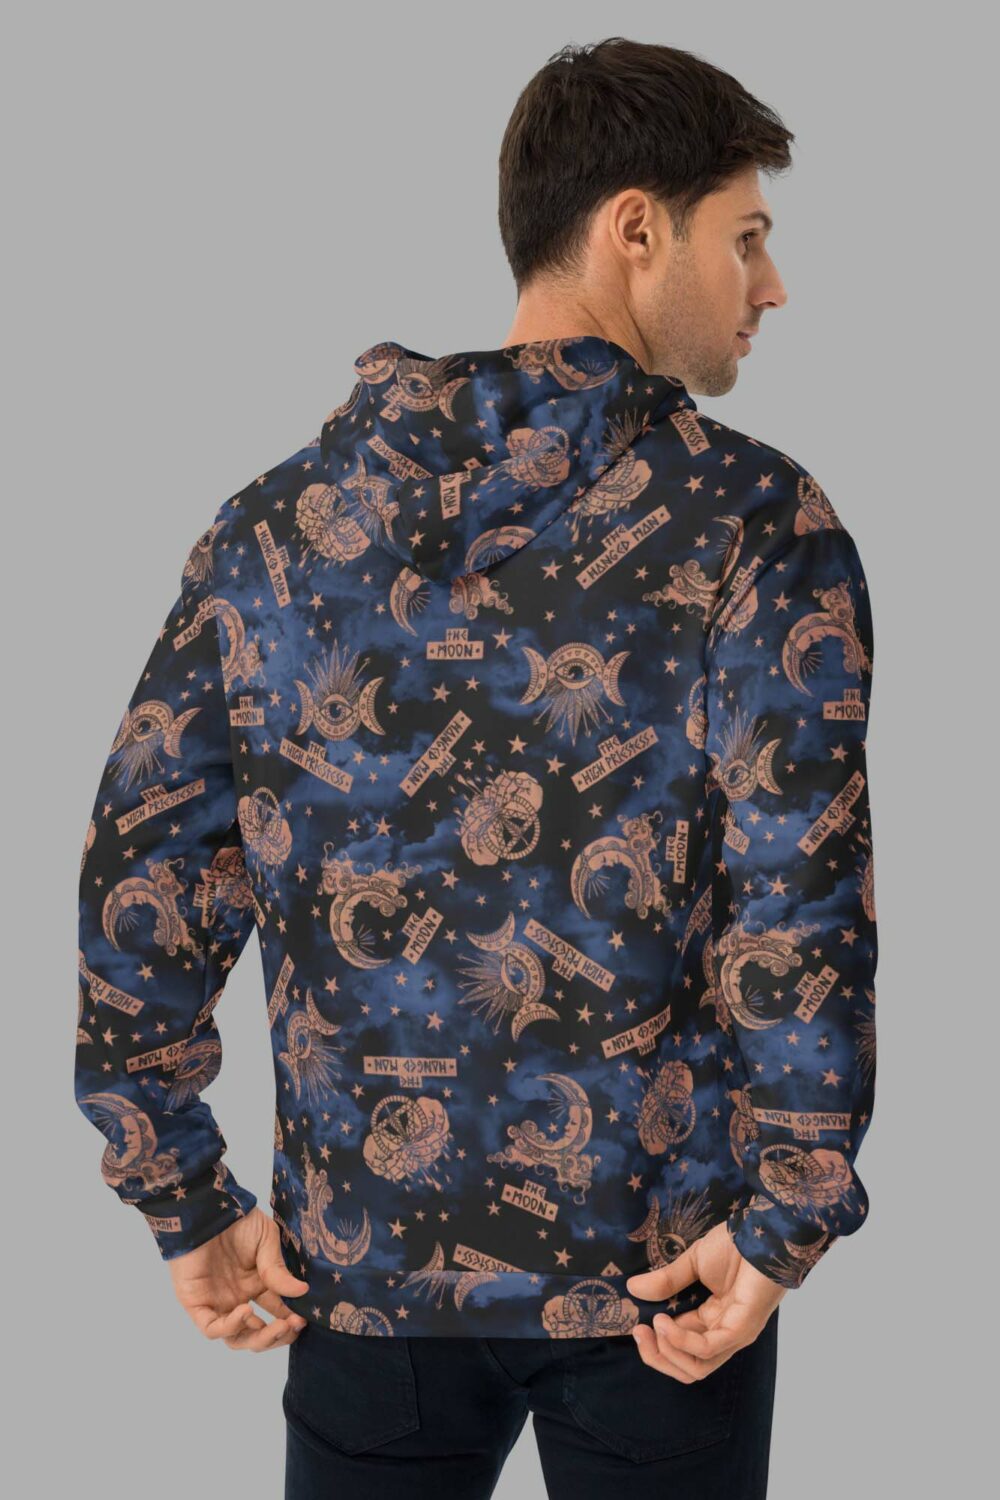 cosmic drifters hoodie back2 tarot print